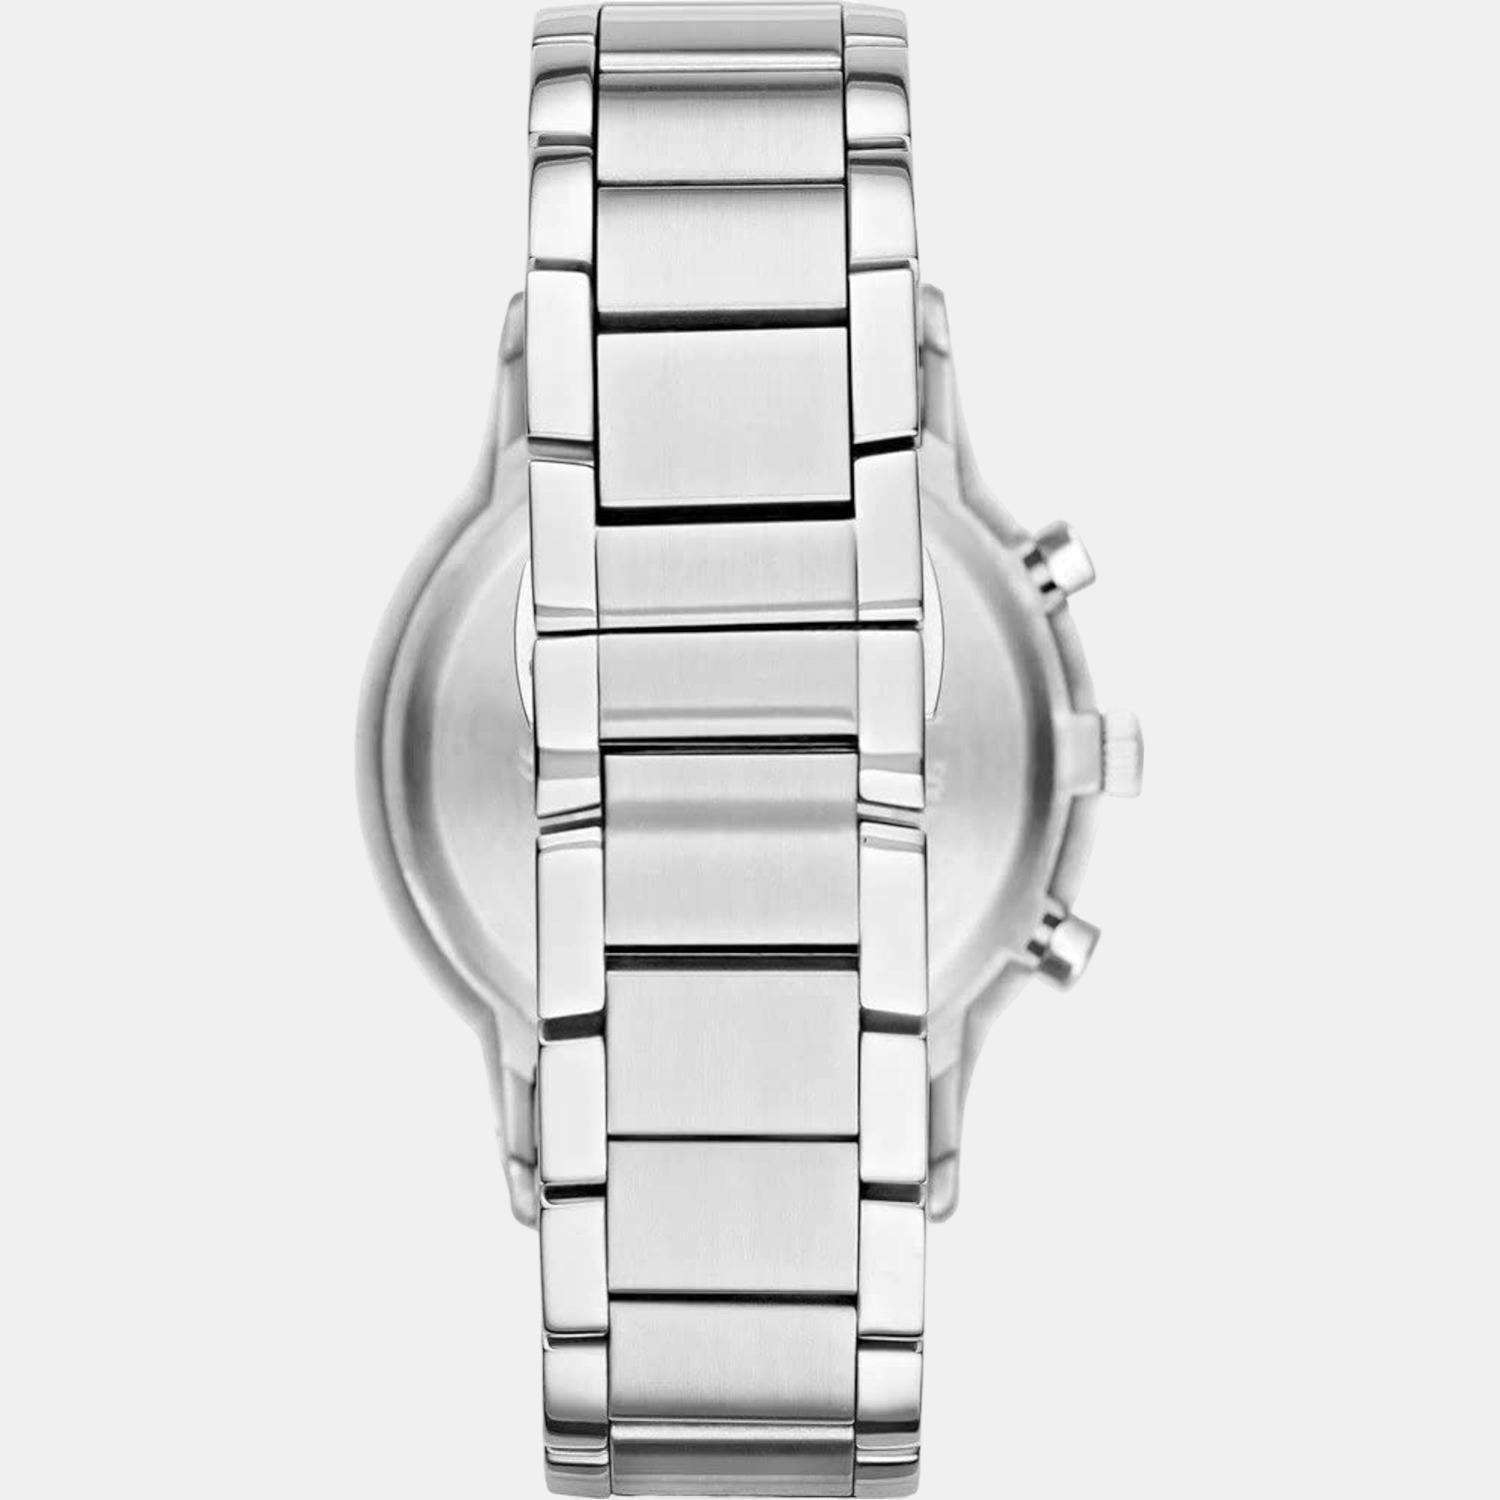 Men's Watch Emporio Armani AR2448 Stainless Steel Analog | eBay